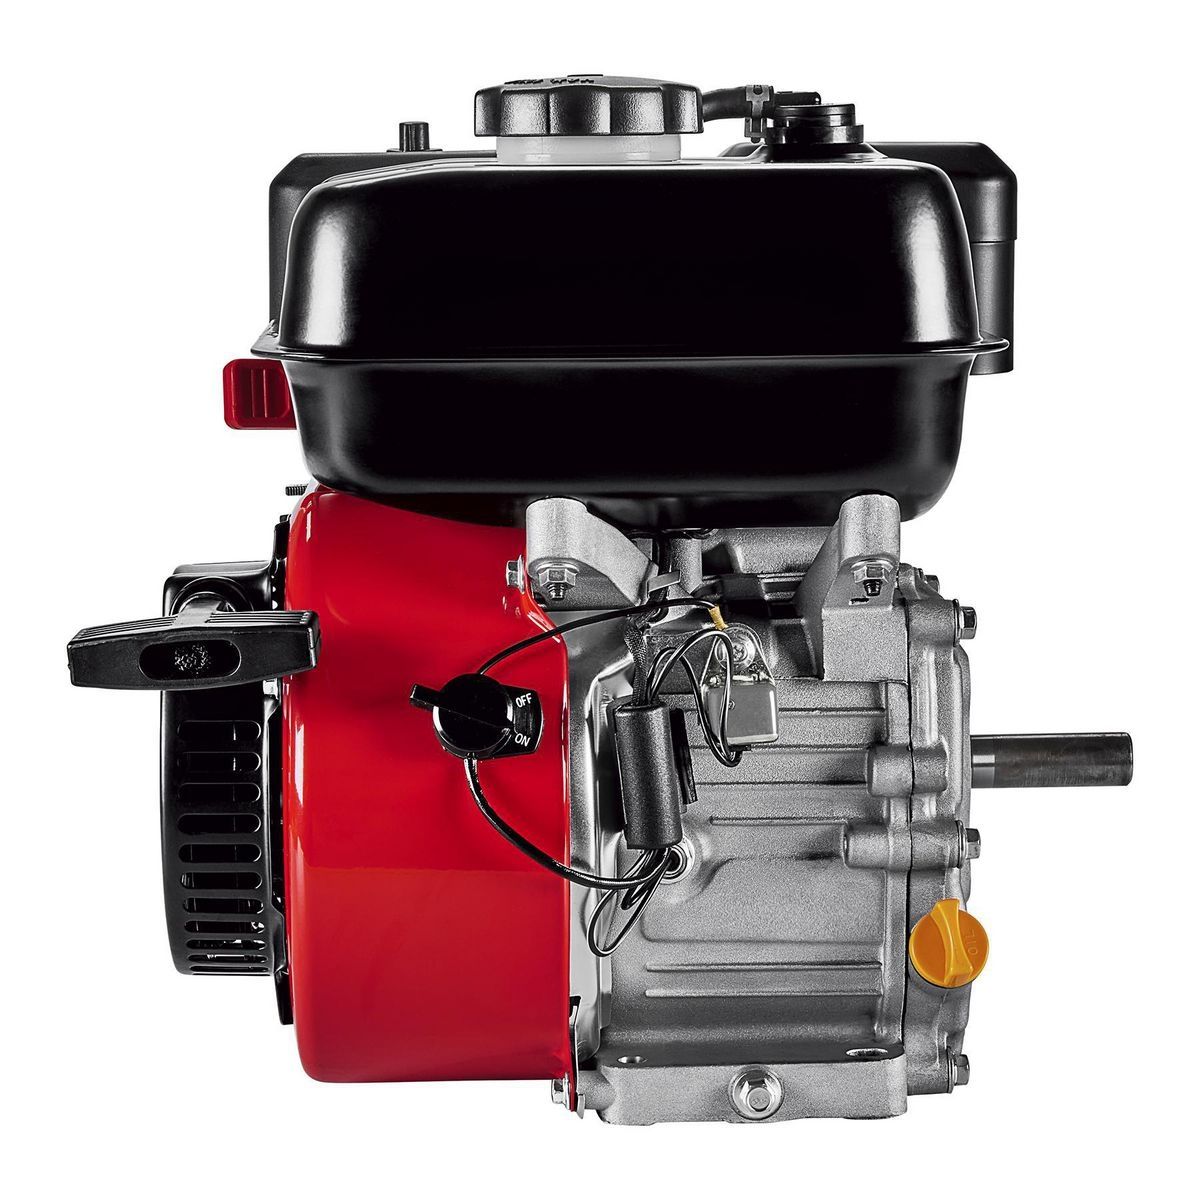 163cc Vertical-Shaft OHV Gas Engine